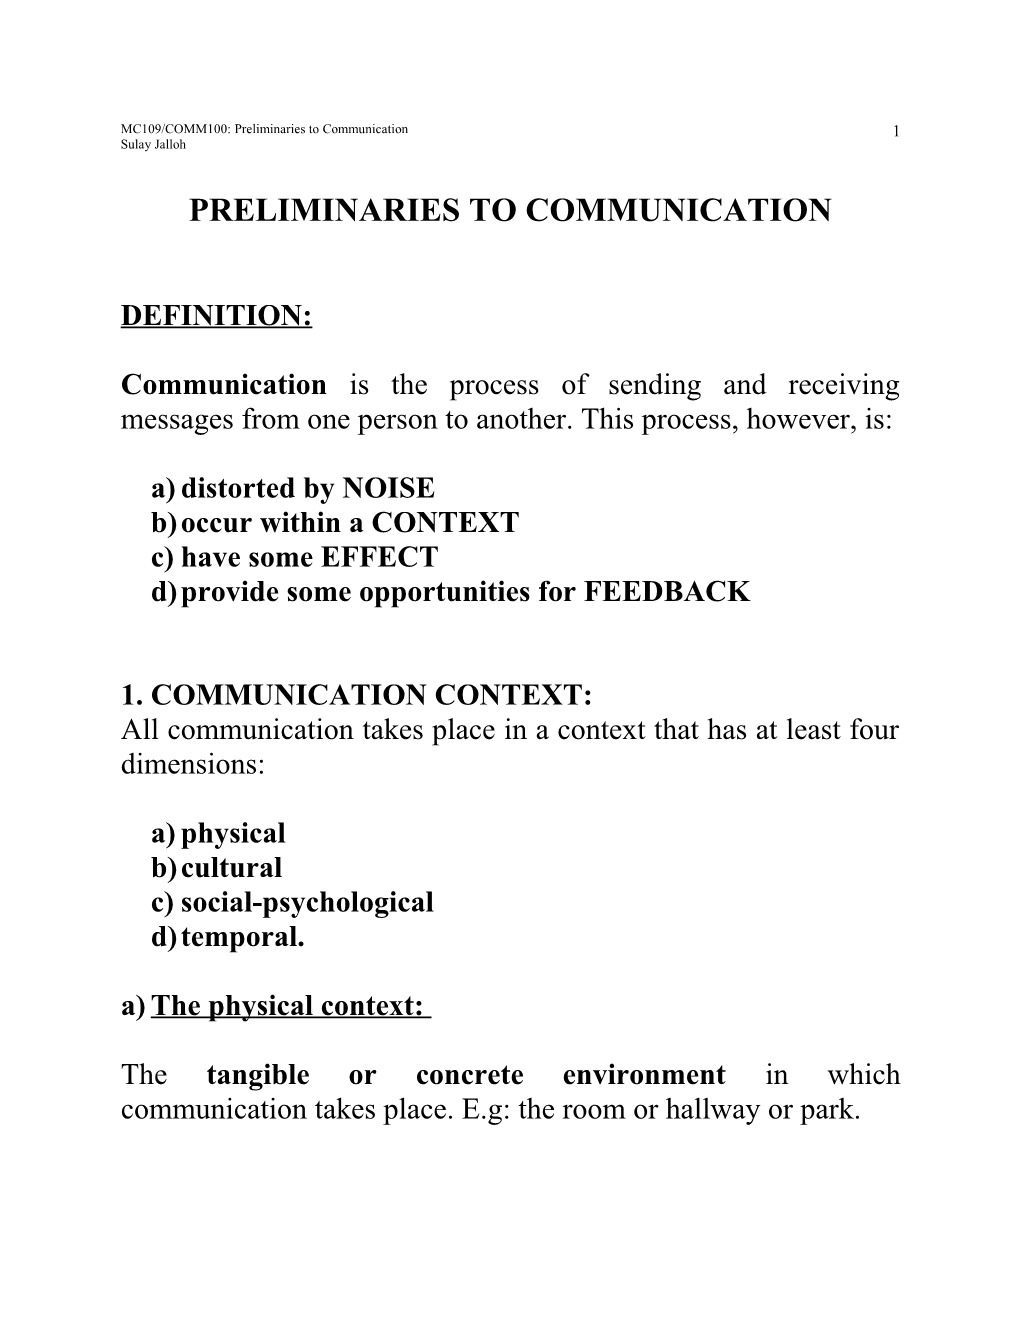 Preliminaries to Human Communication